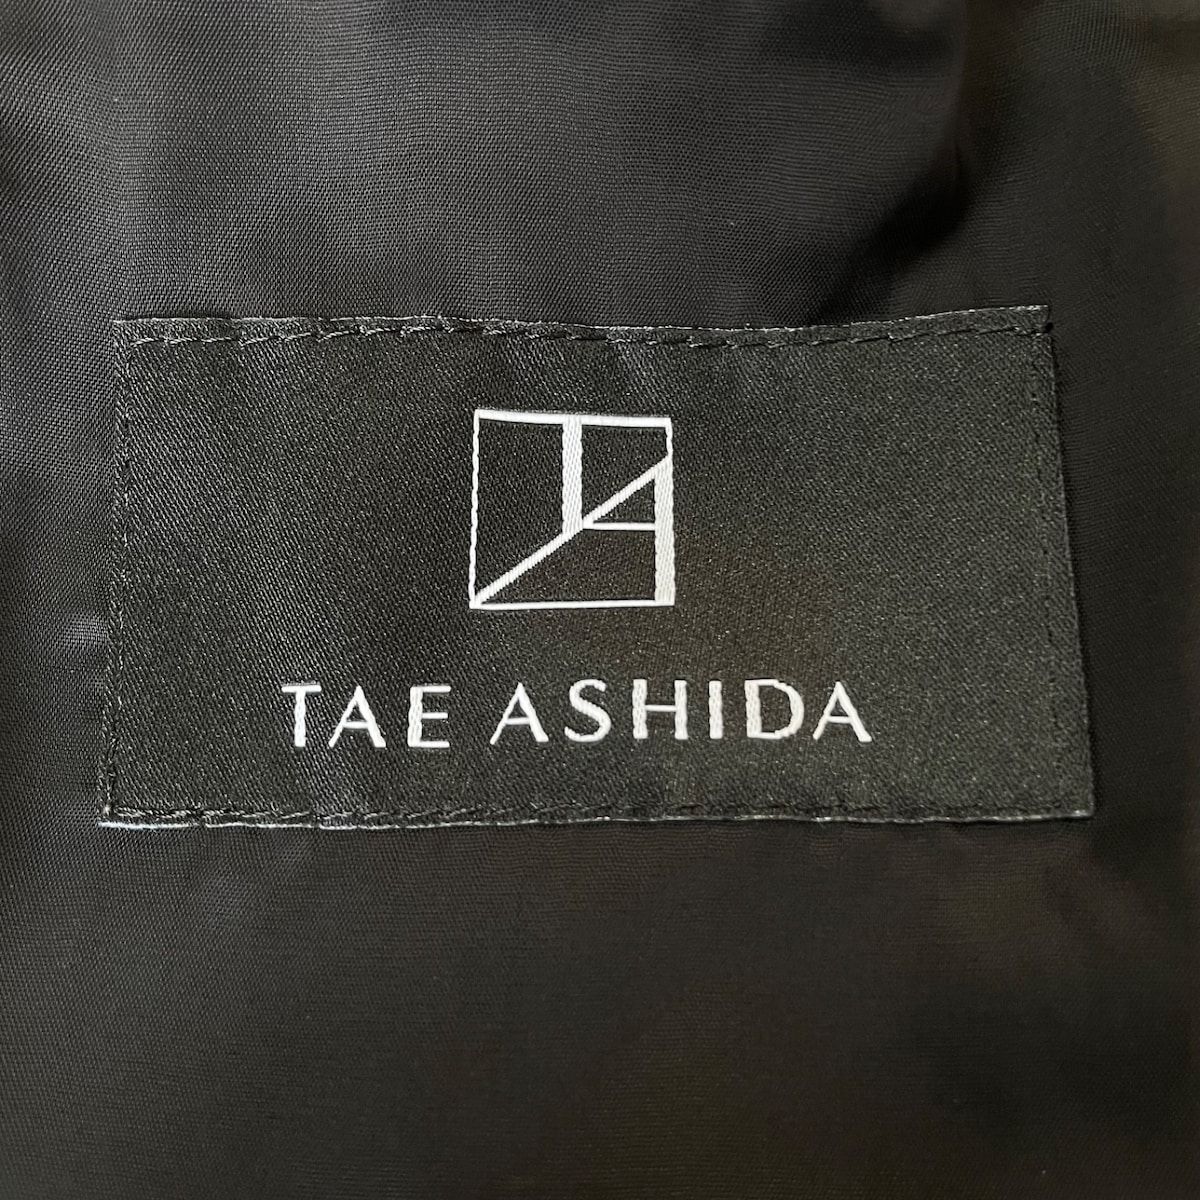 TAE ASHIDA(タエアシダ) ワンピース サイズ9 M レディース美品 - 黒 ノースリーブ/ひざ丈/ビジュー ポリエステル、アクリル